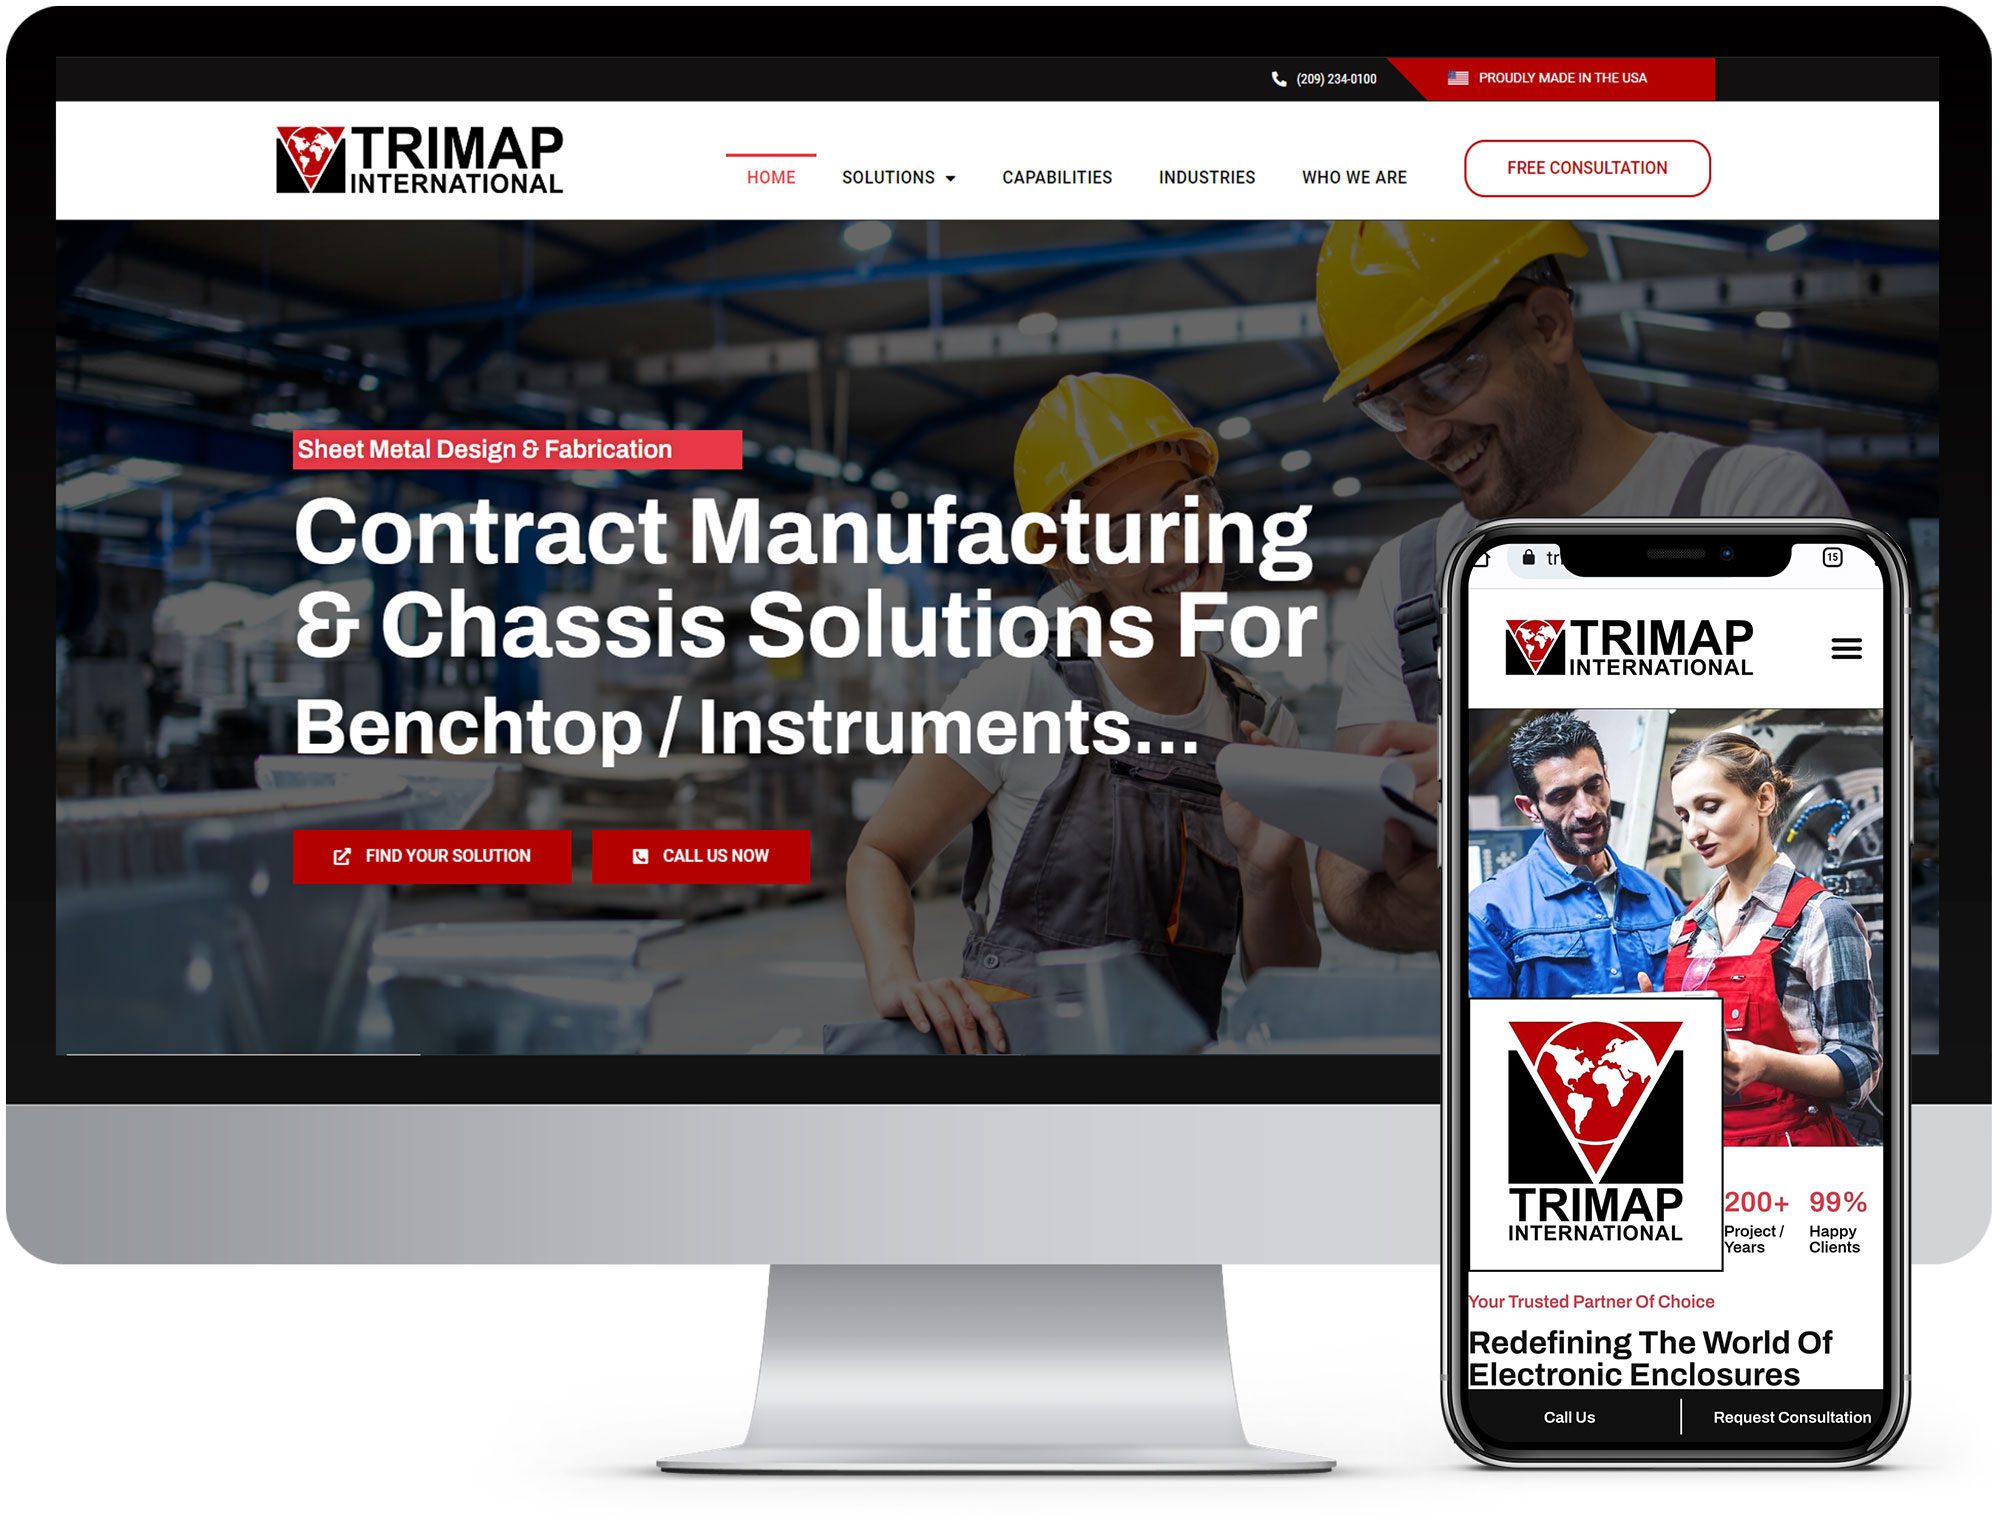 Trimap International Website was designed and developed by Cloudkrest